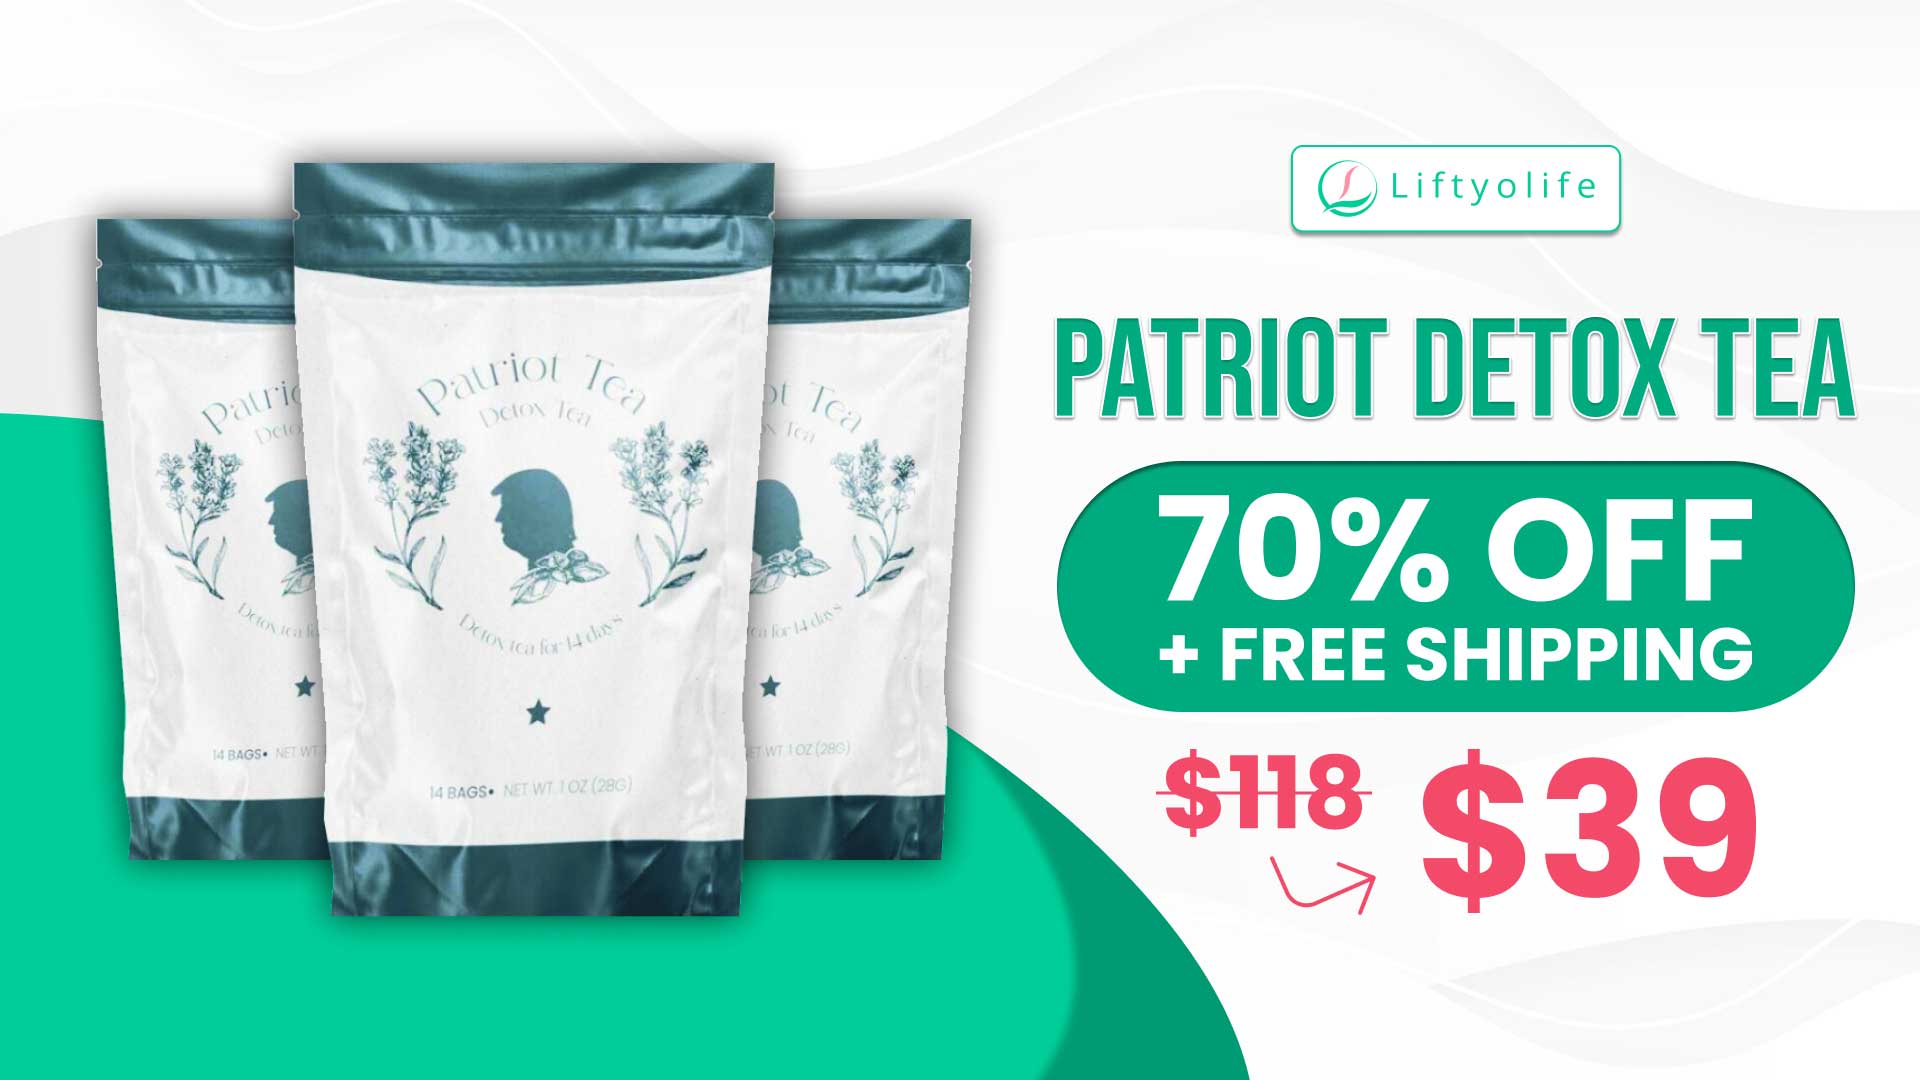 Patriot Detox Tea Pricing